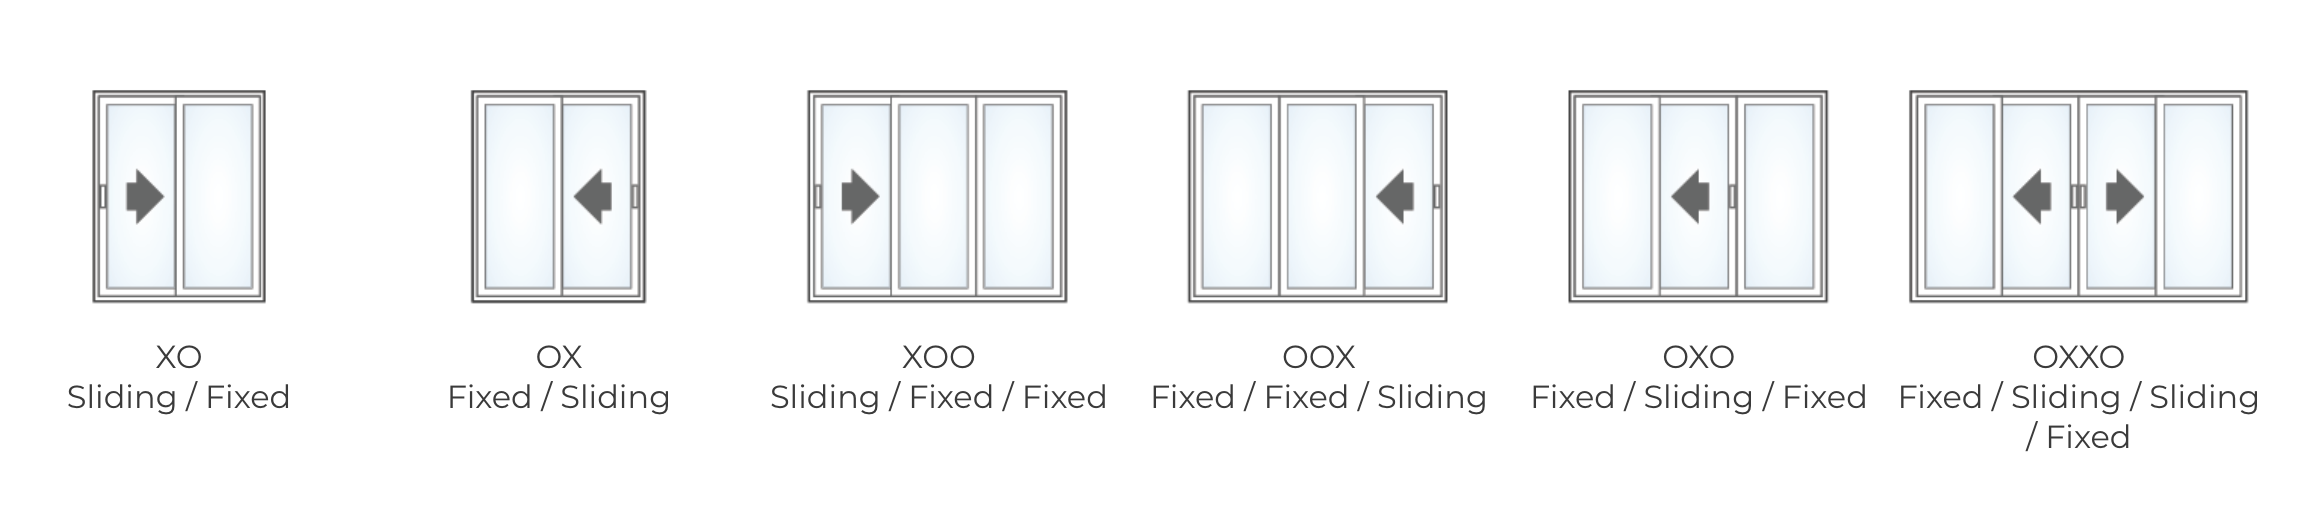 Sliding Patio Door Configuration Options